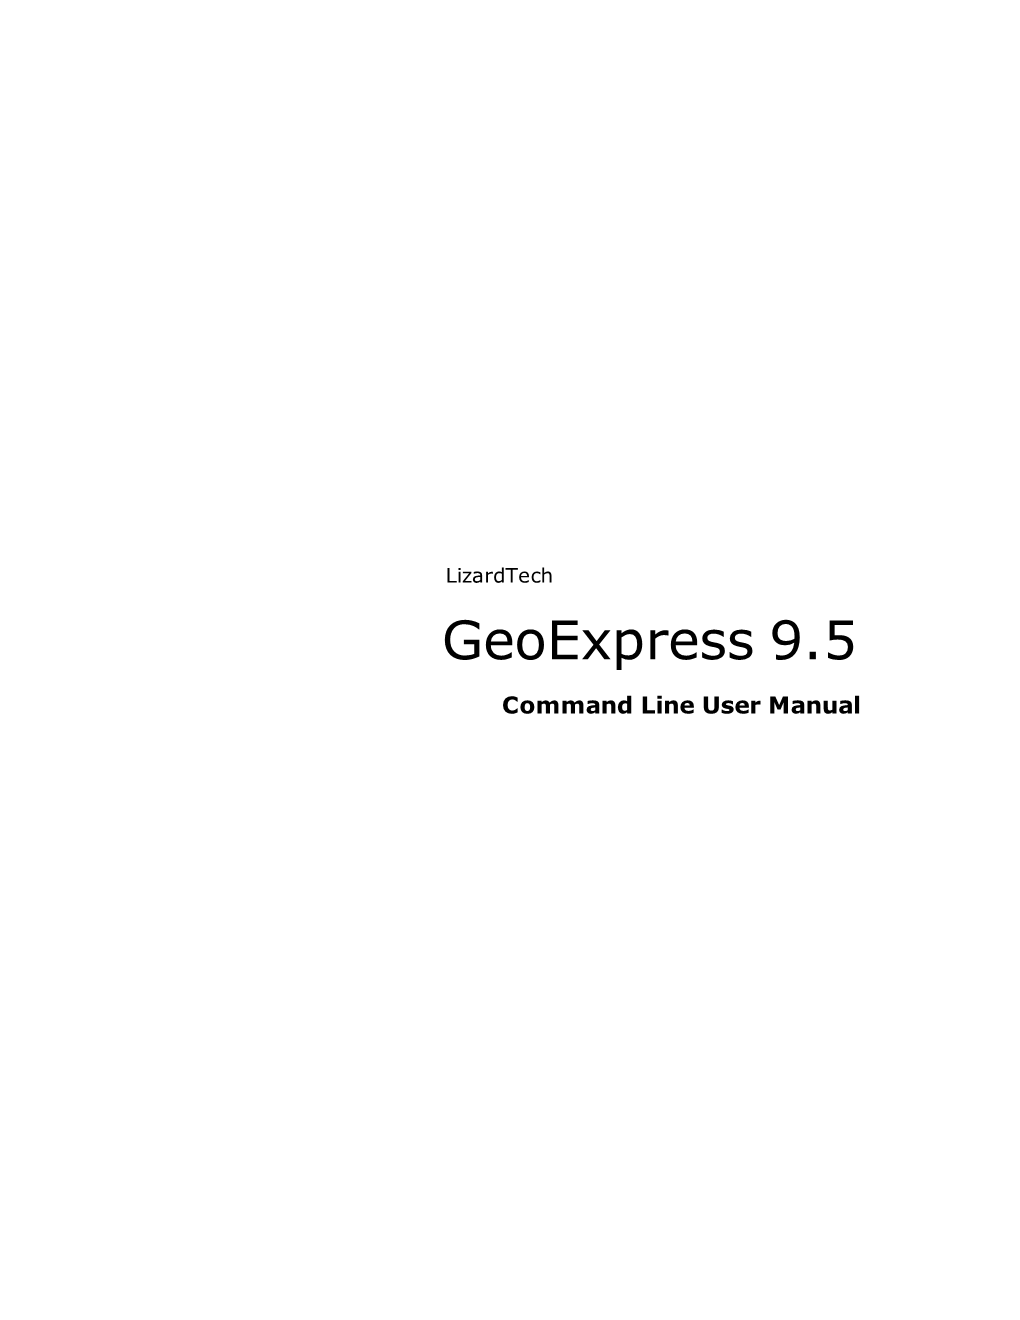 Geoexpress Command Line User Manual